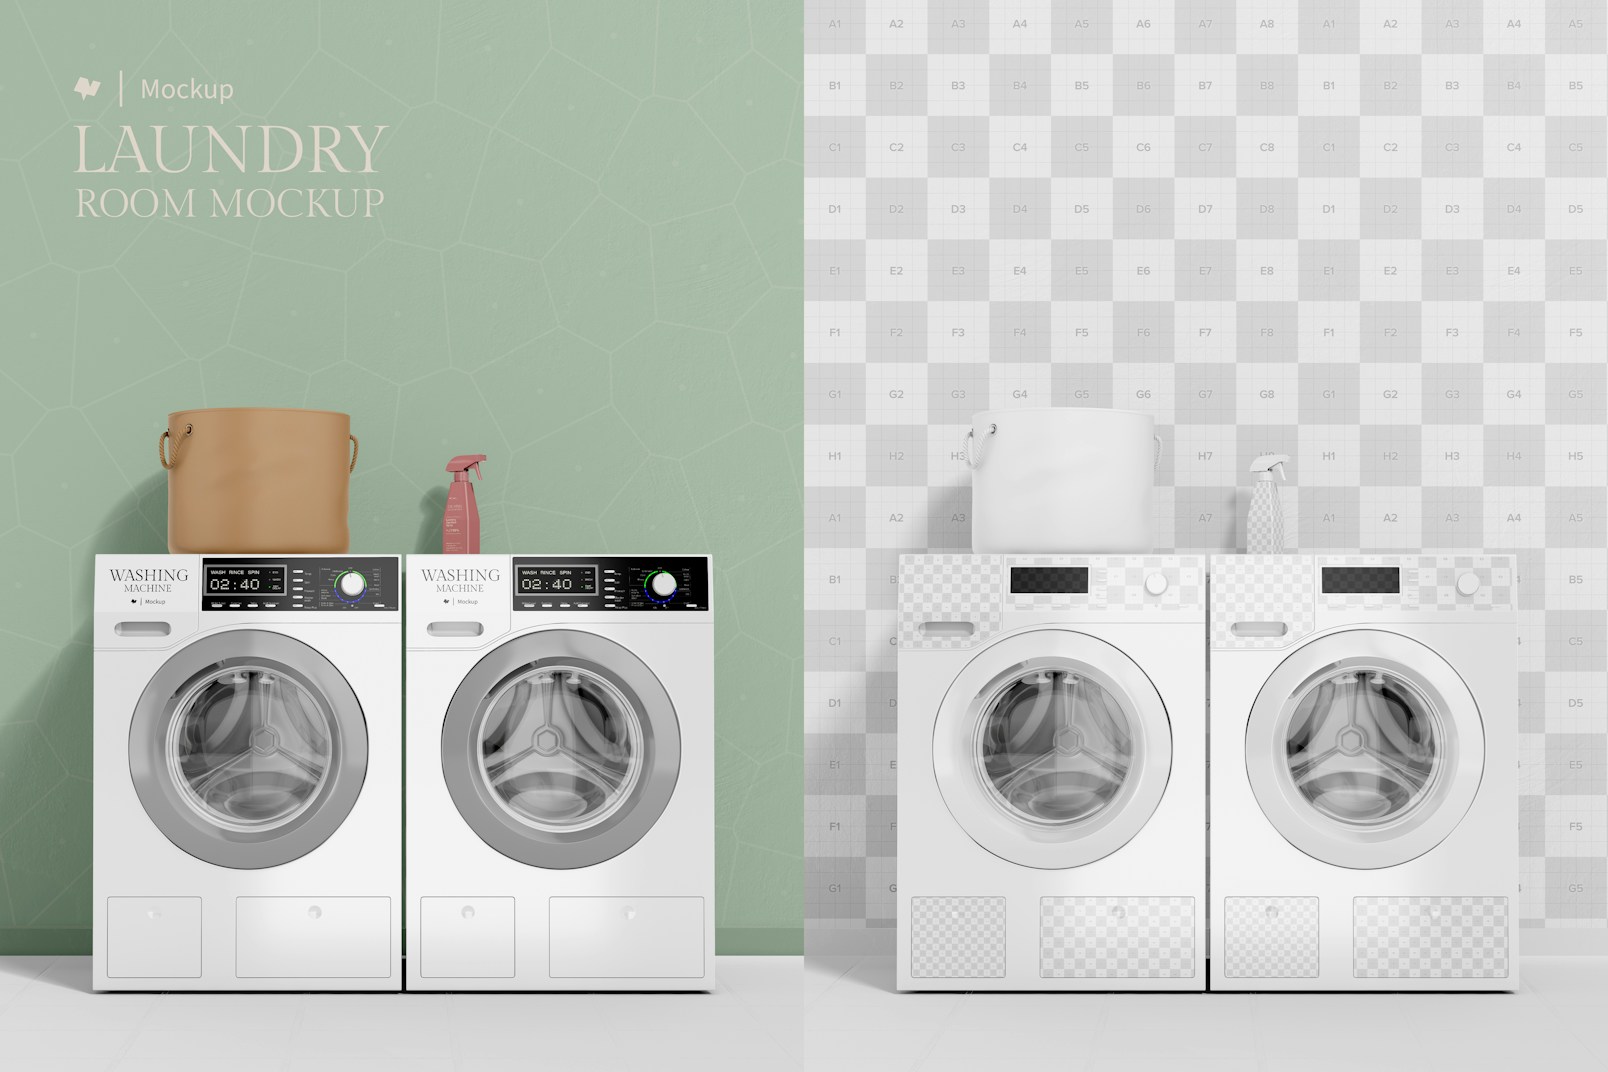 Laundry Room Wall Mockup, with Washing Machines